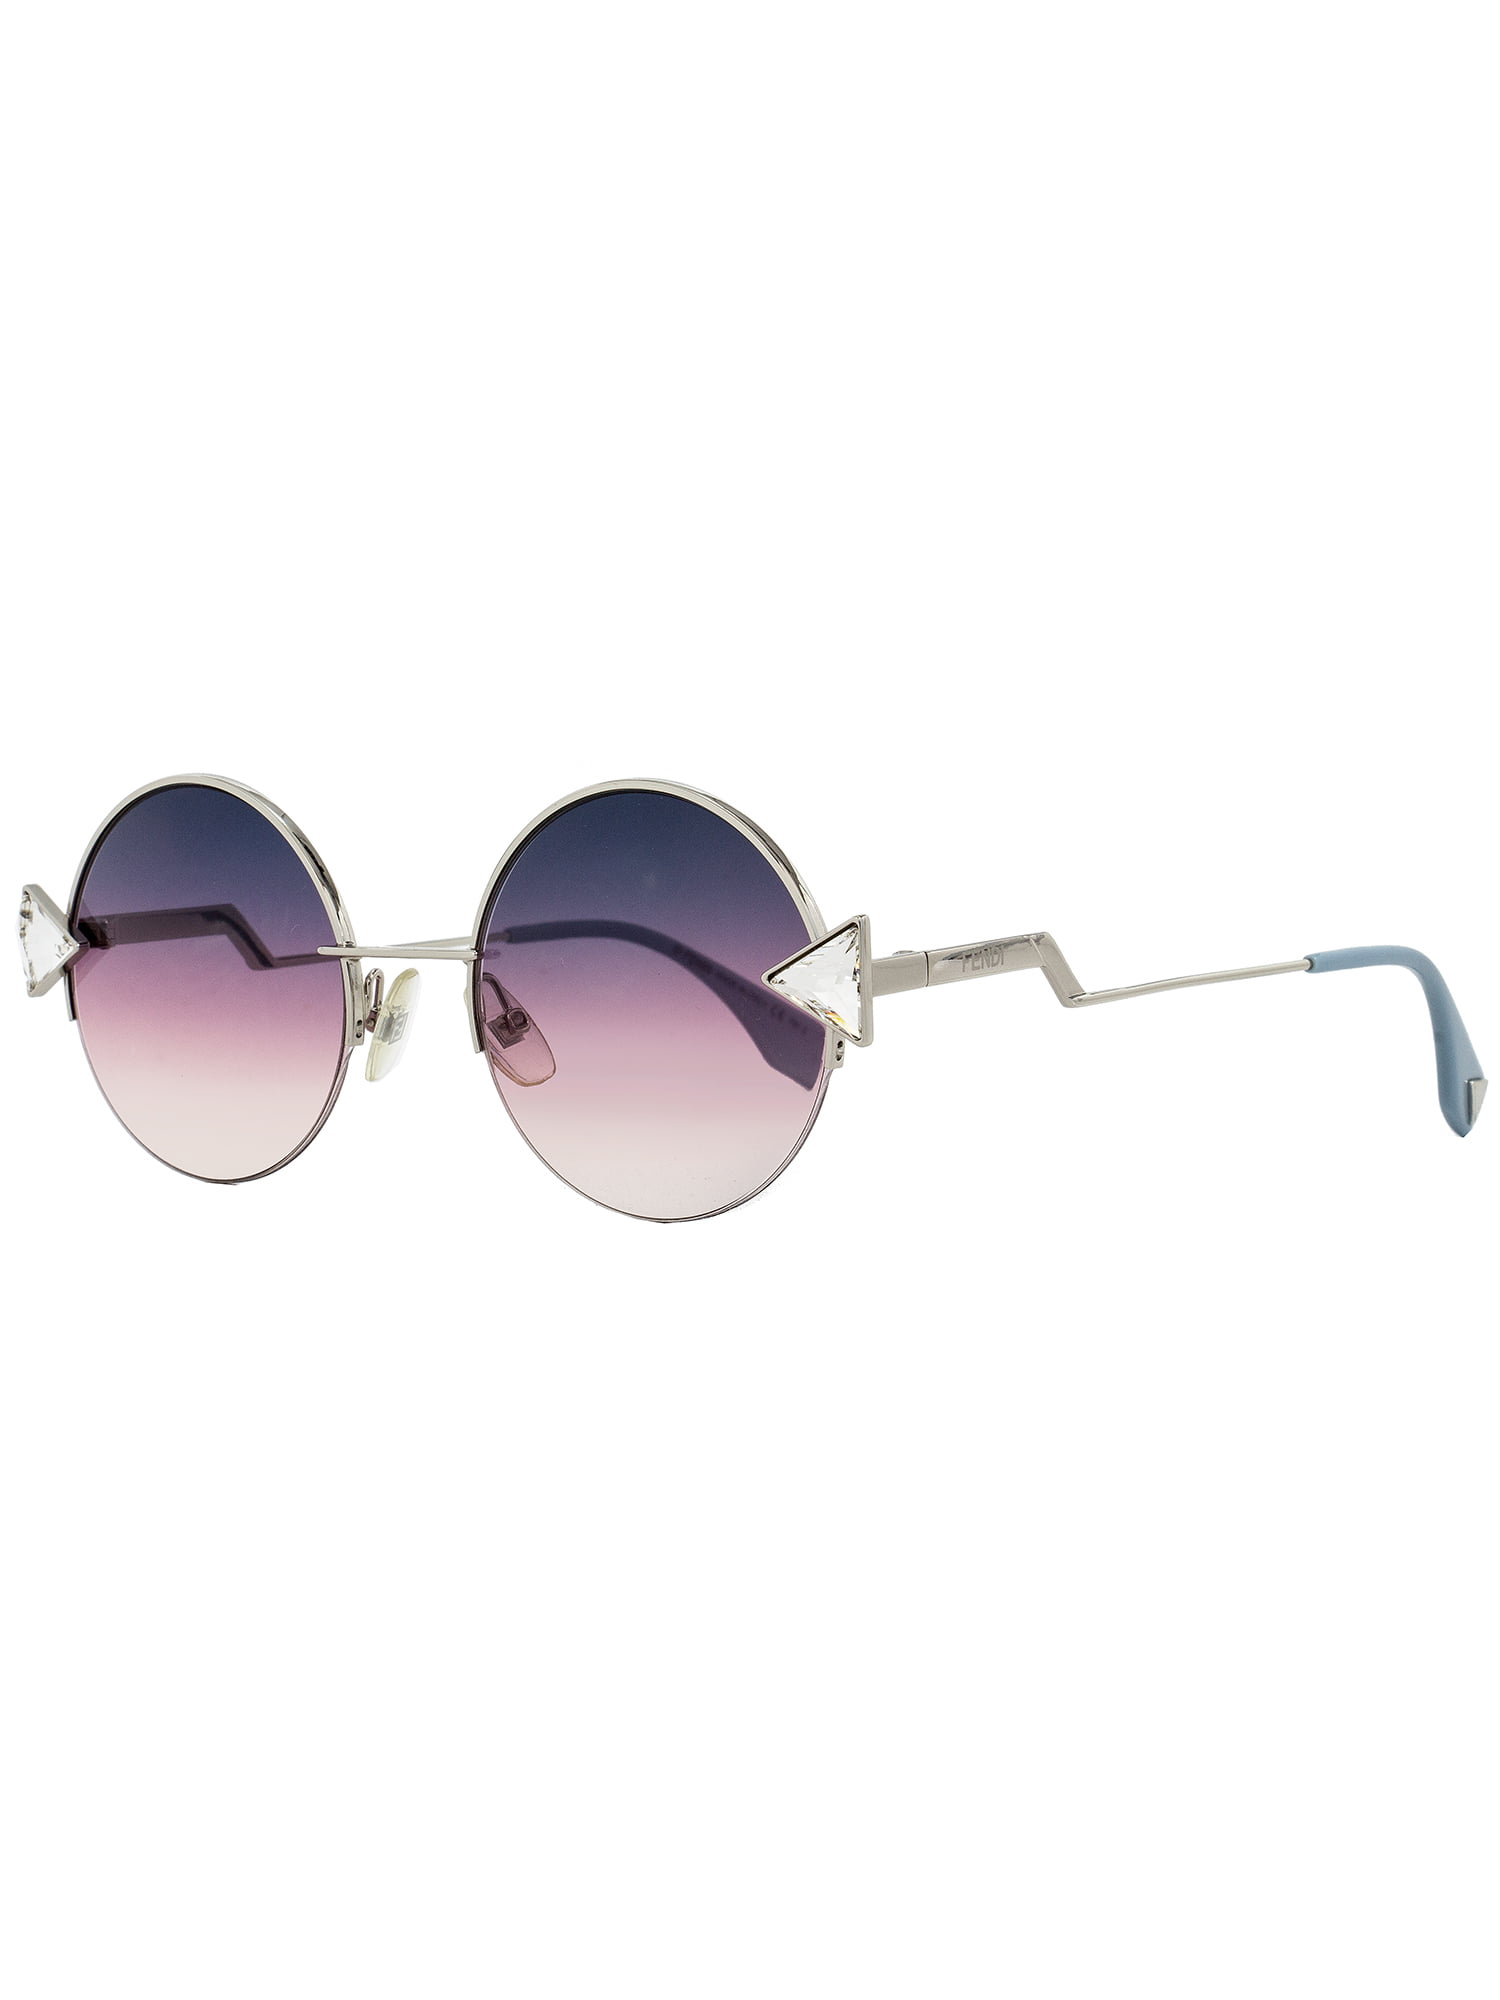 Fendi Pink Gradient Round Sunglasses FF 